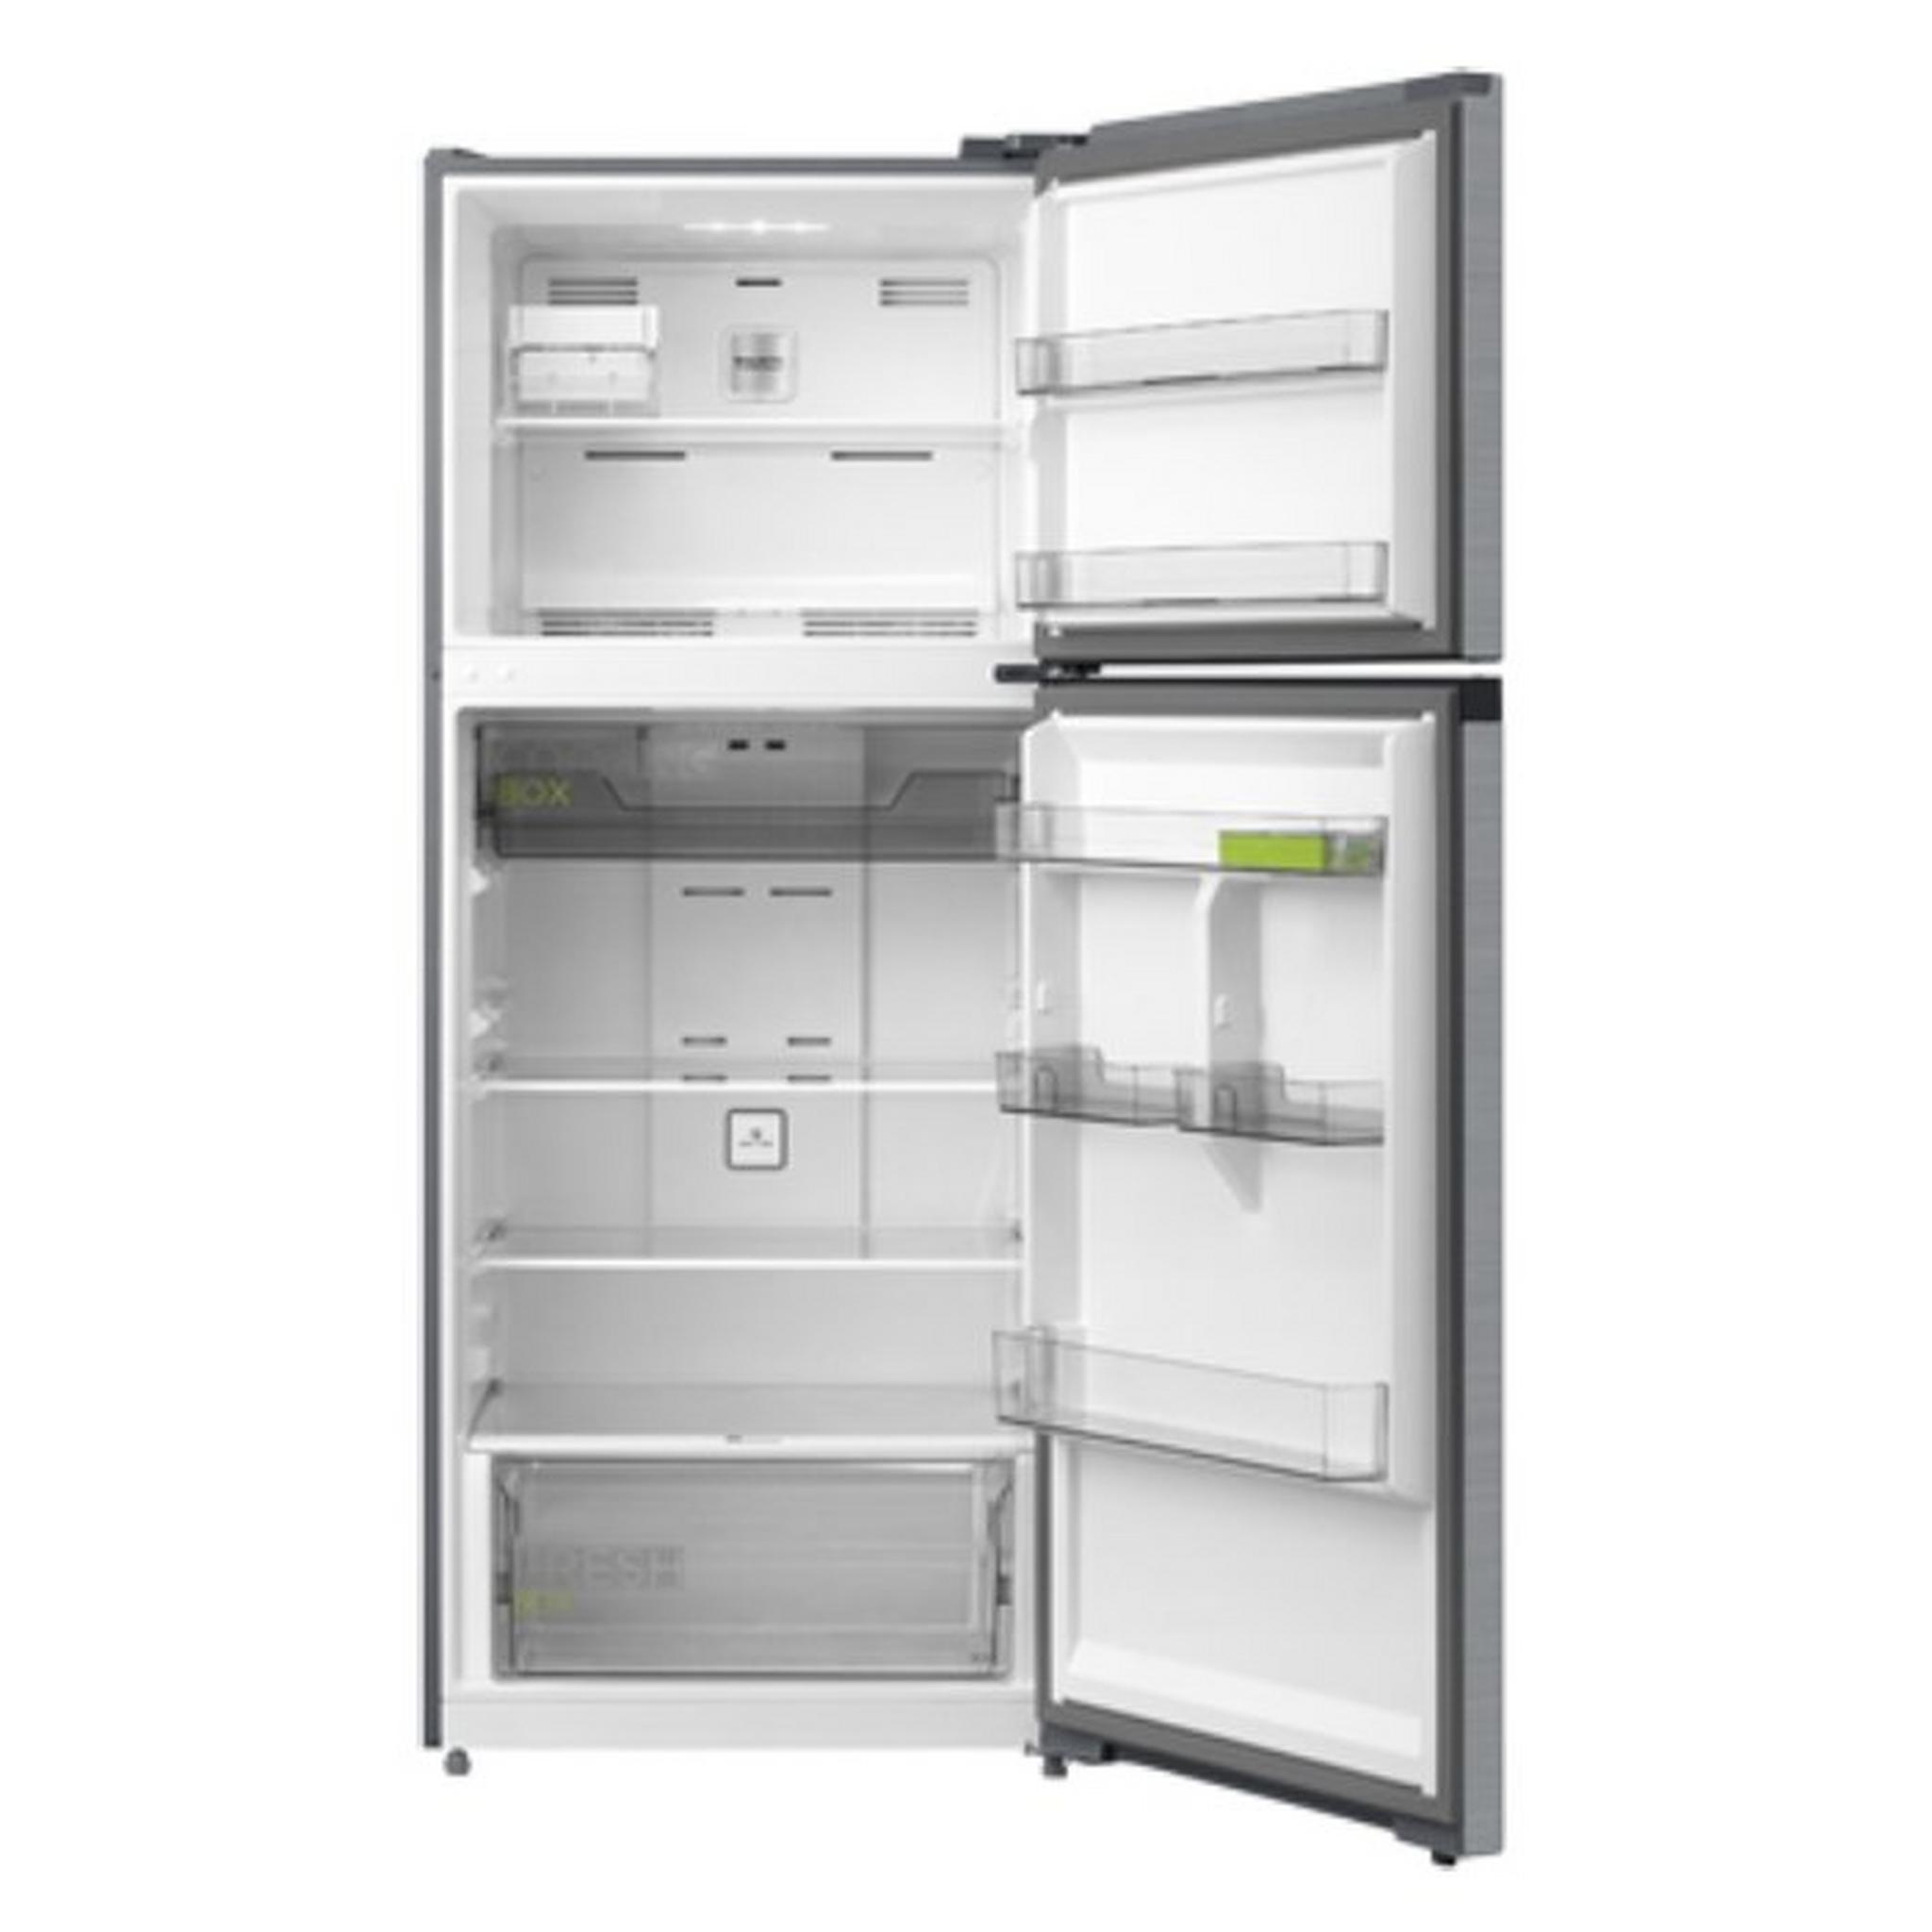 Midea 14.6 Cft. Top Mount Refrigerator (HD559FWEN) - Silver